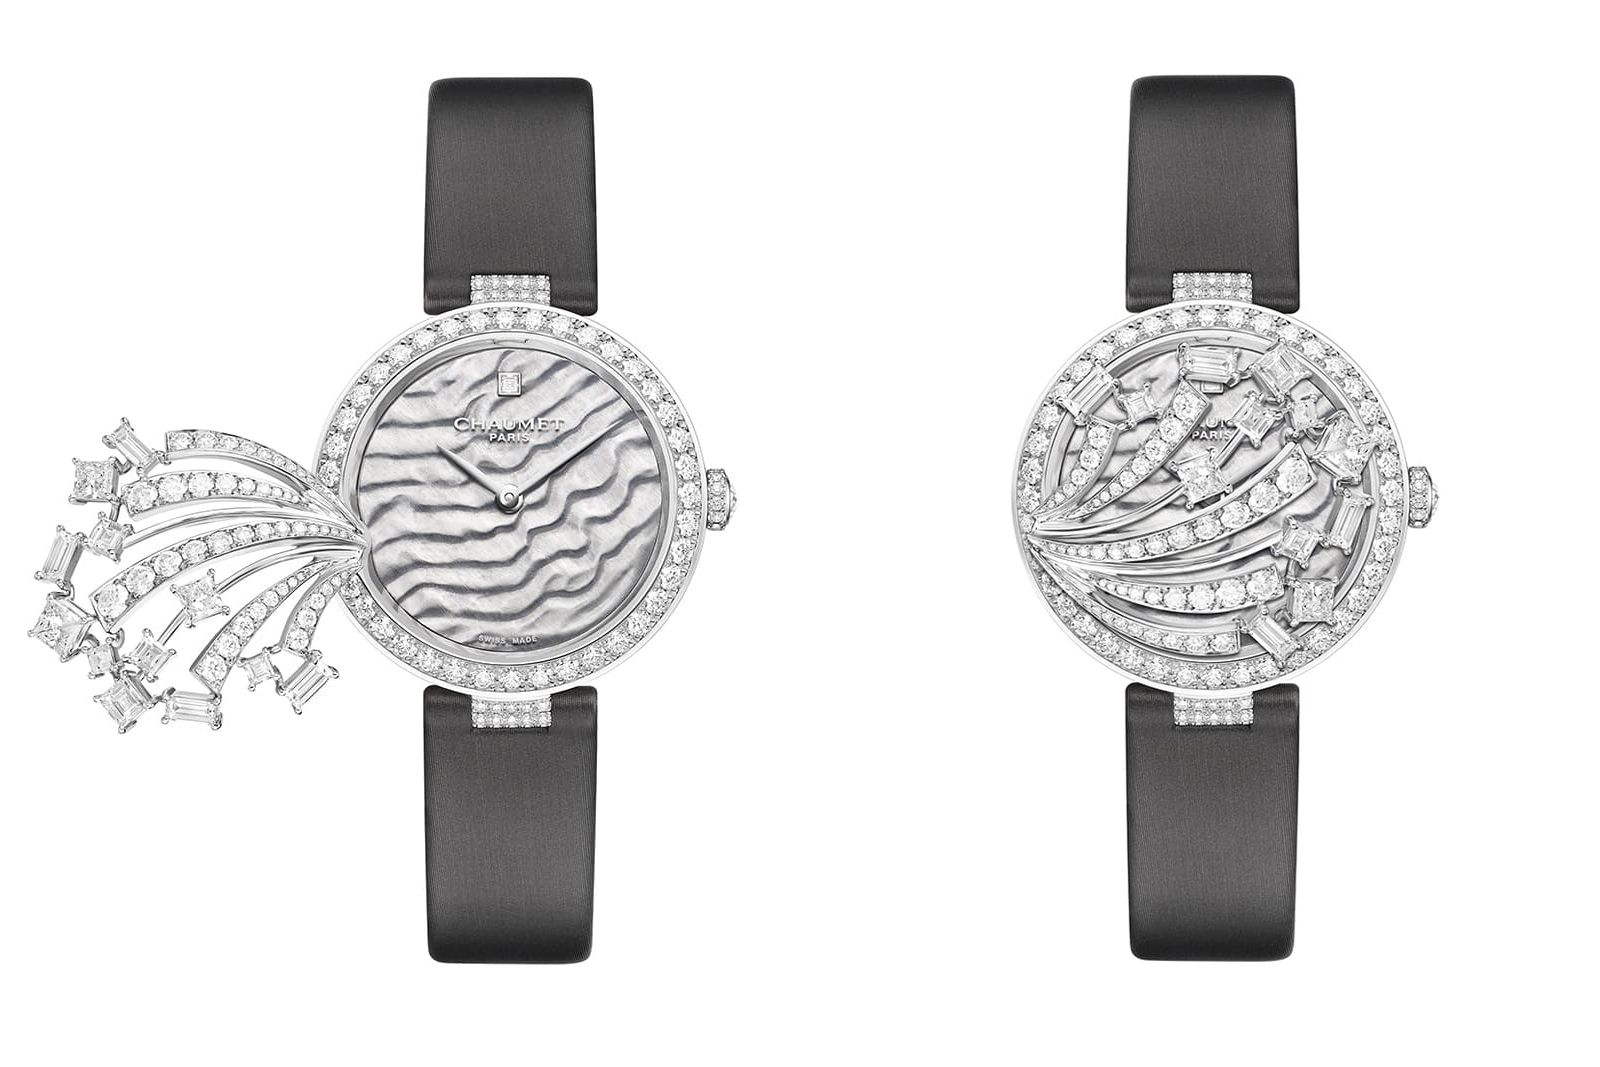 Chaumet Déferlante Swiss mechanical self-winding secret watch in white gold set with brilliant-cut, square-cut, baguette-cut and princess-cut diamonds